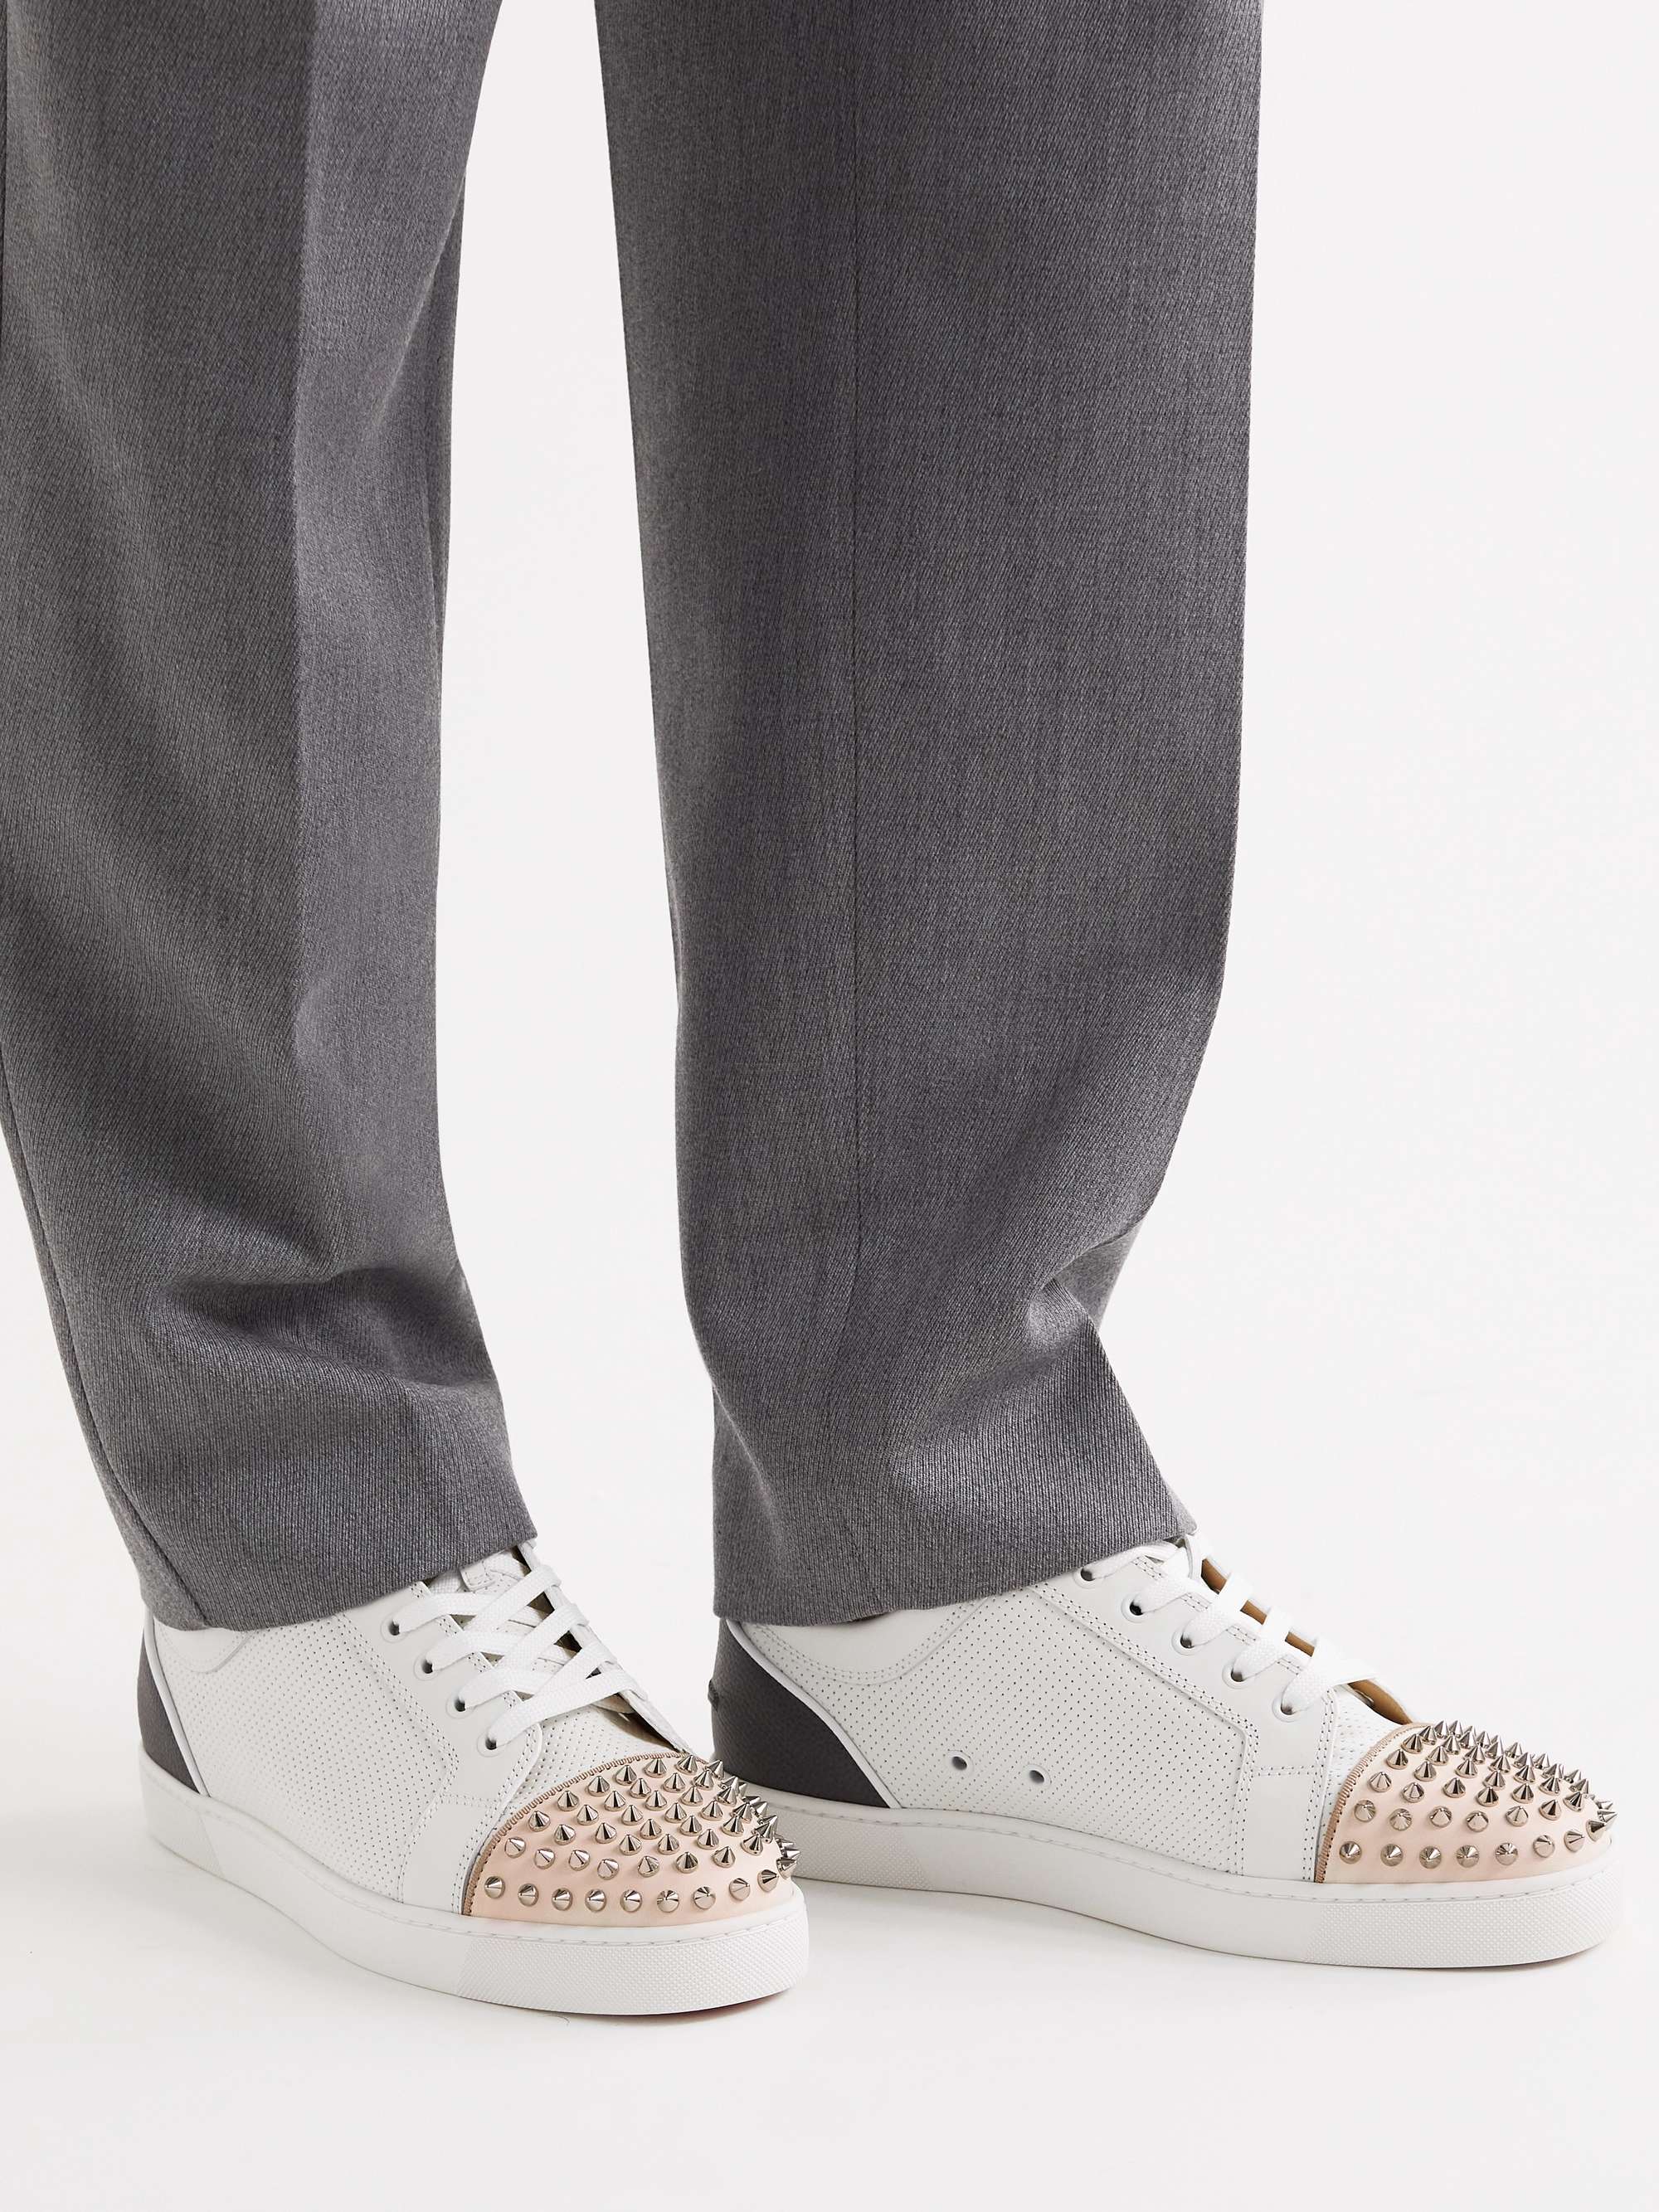 Christian Louboutin Louis Junior Spikes Cap-Toe Leather Sneakers - Men - White Sneakers - EU 42